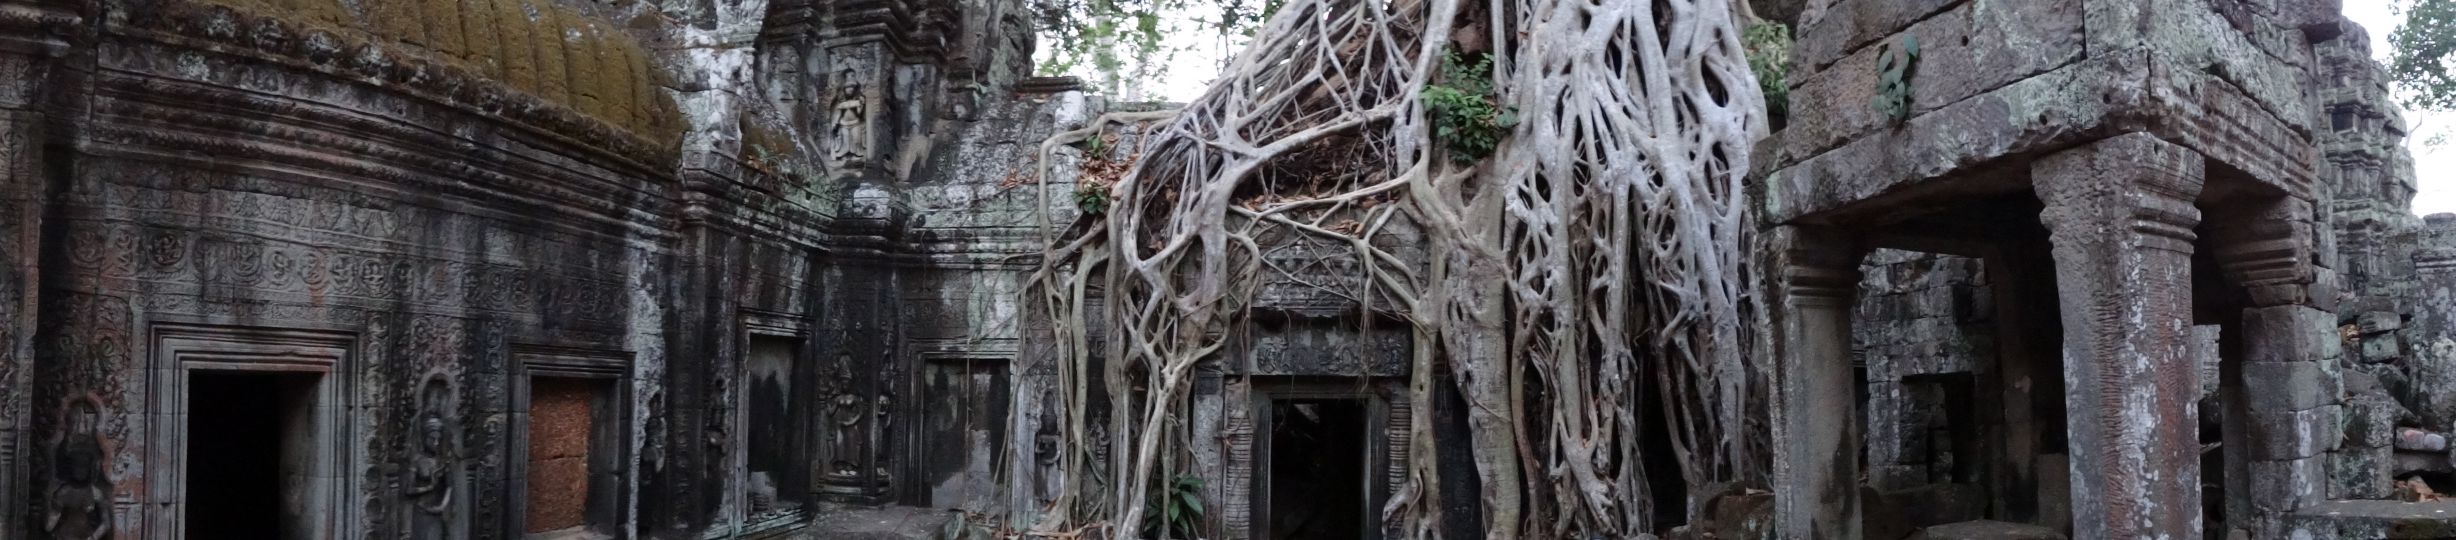 Cambodia - Siem Reap